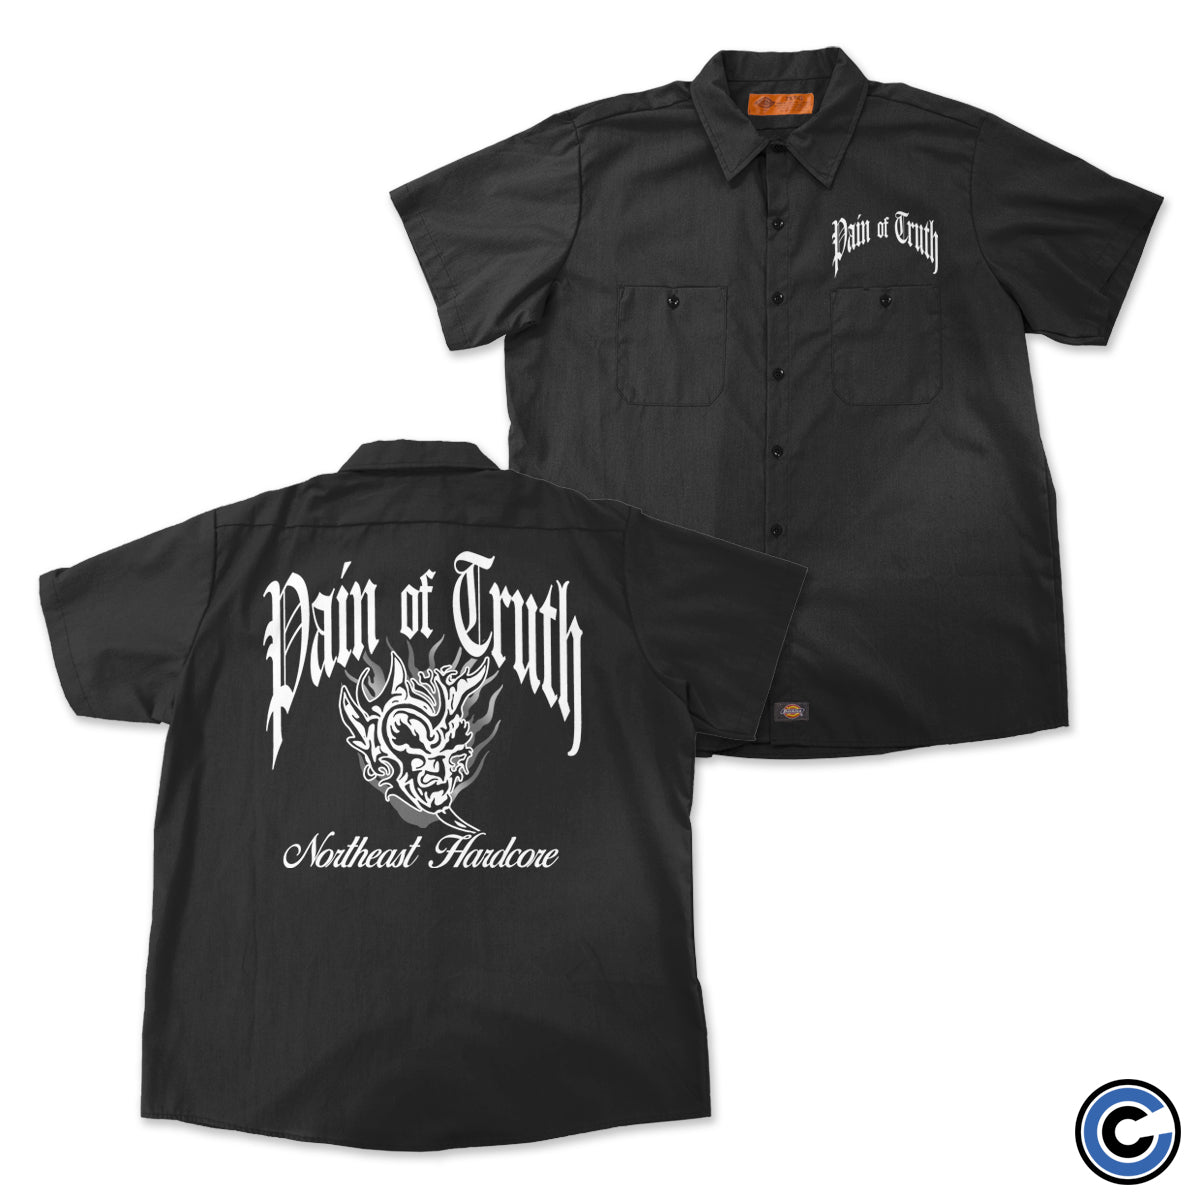 Pain of Truth "Devil" Work Shirt